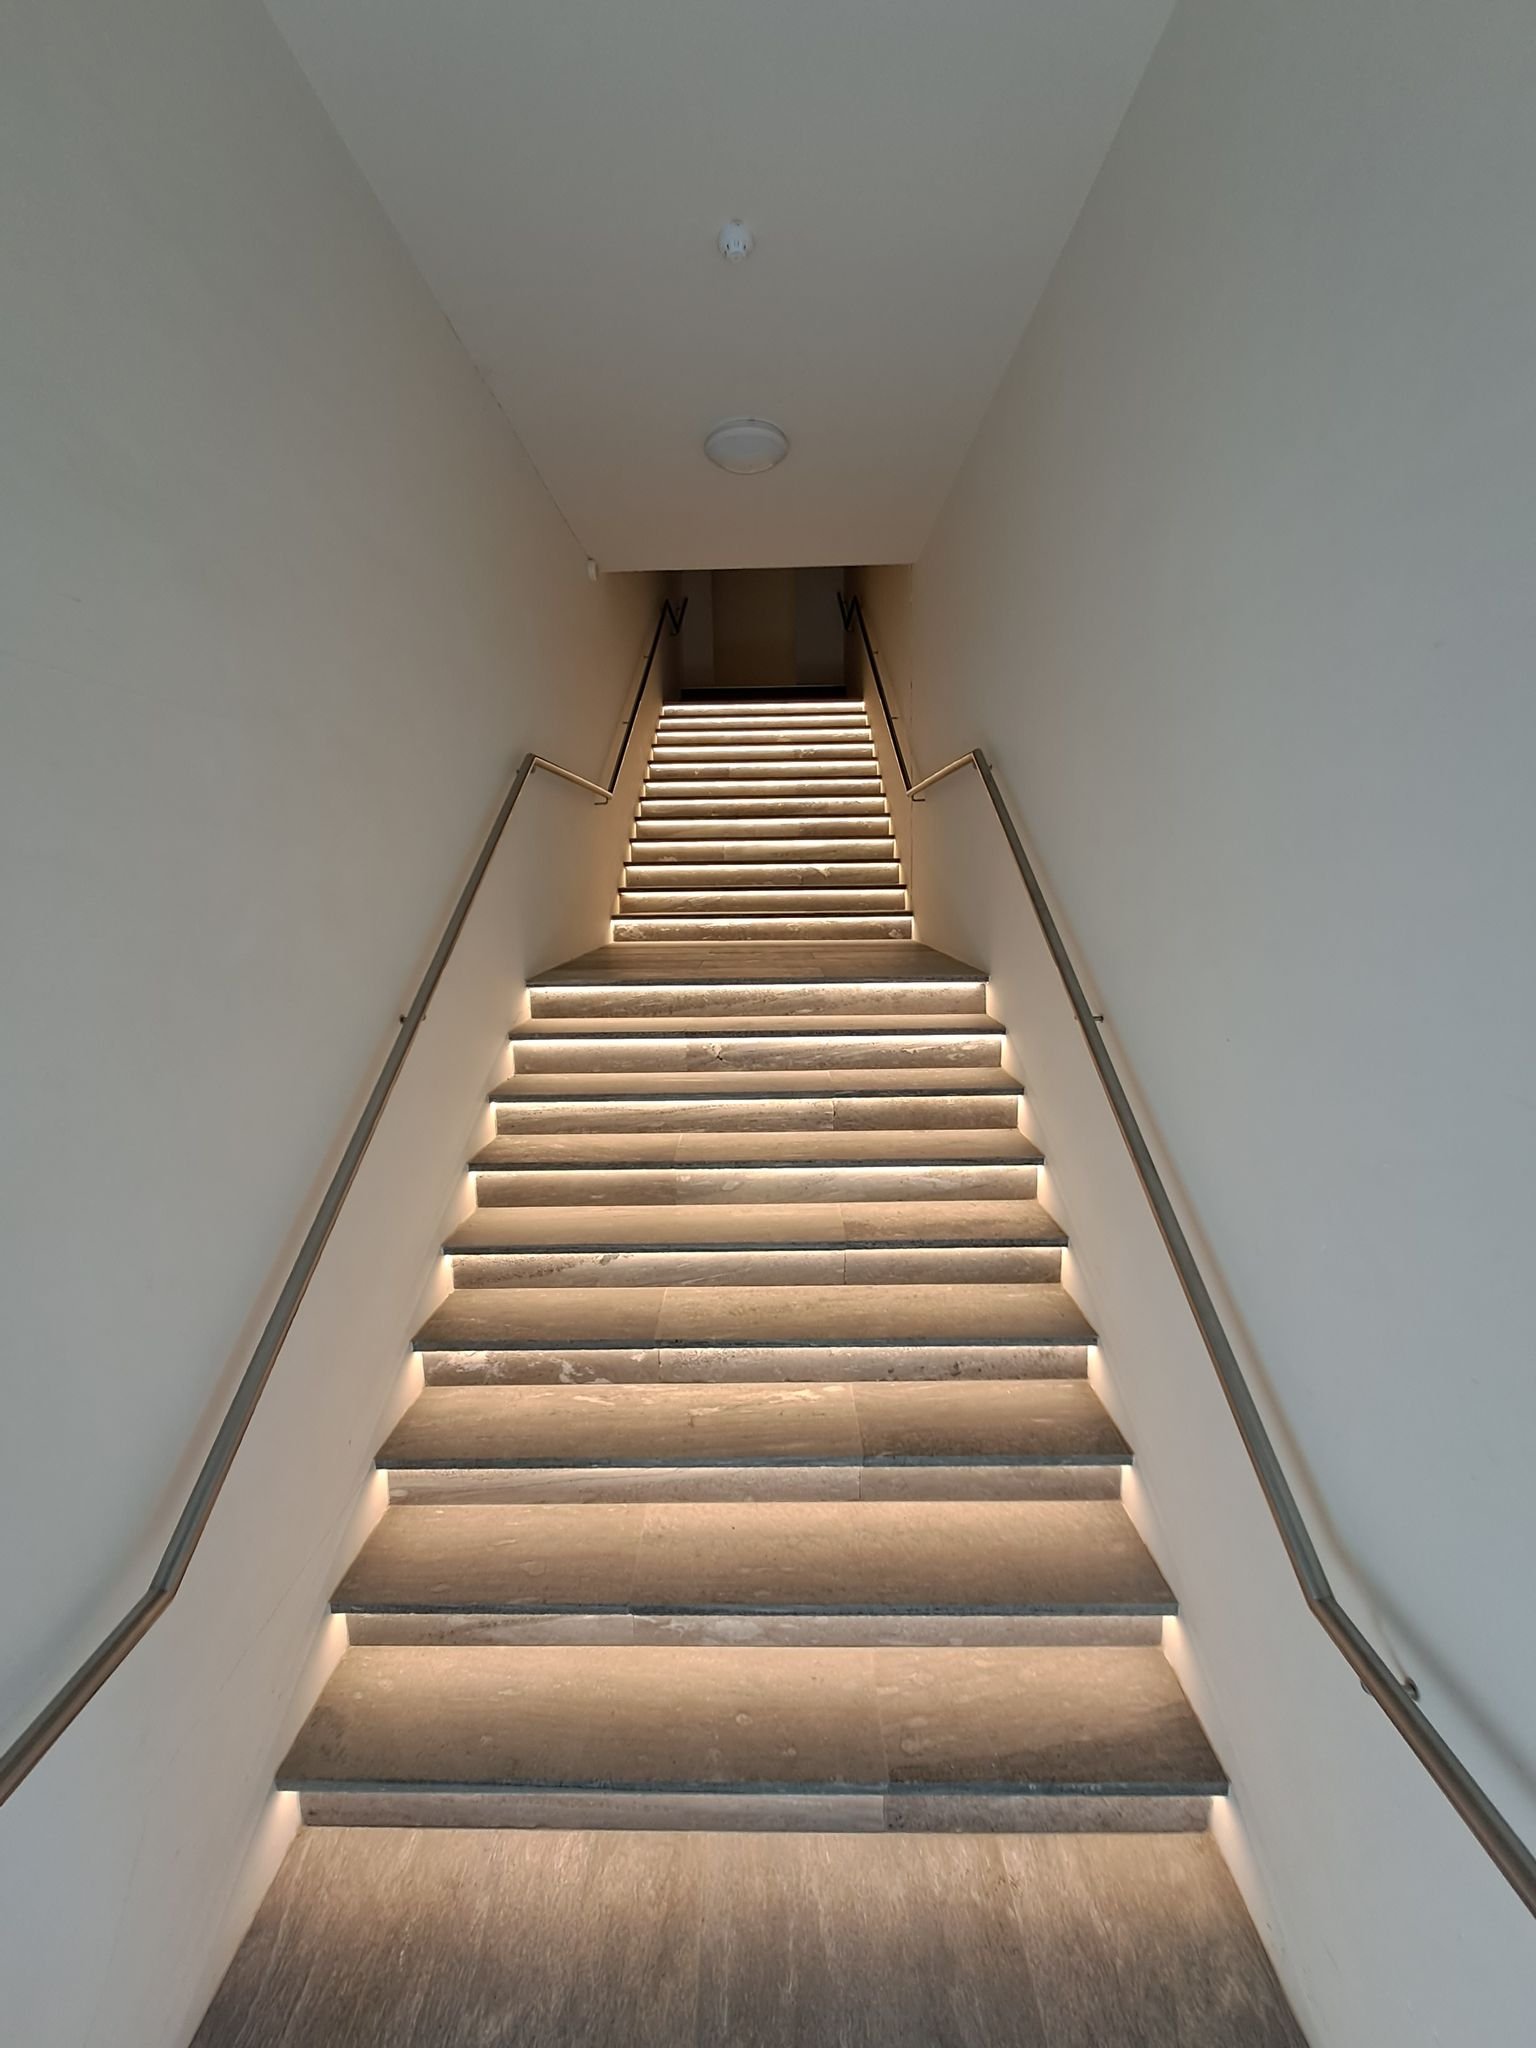 Stairway Tile Installation